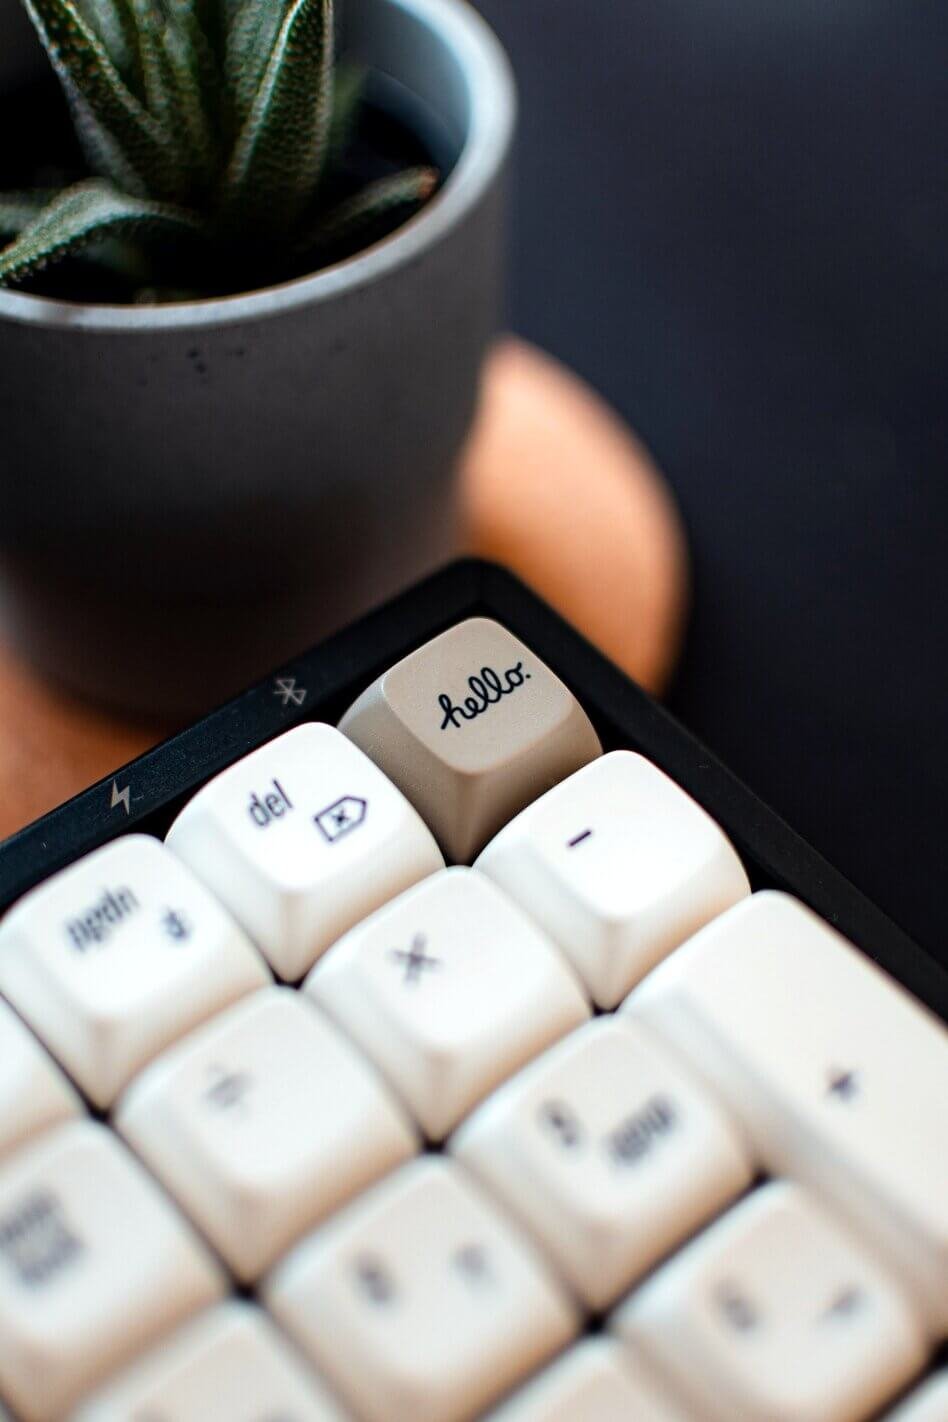 modular keyboard with white pesonalised keys on the desk